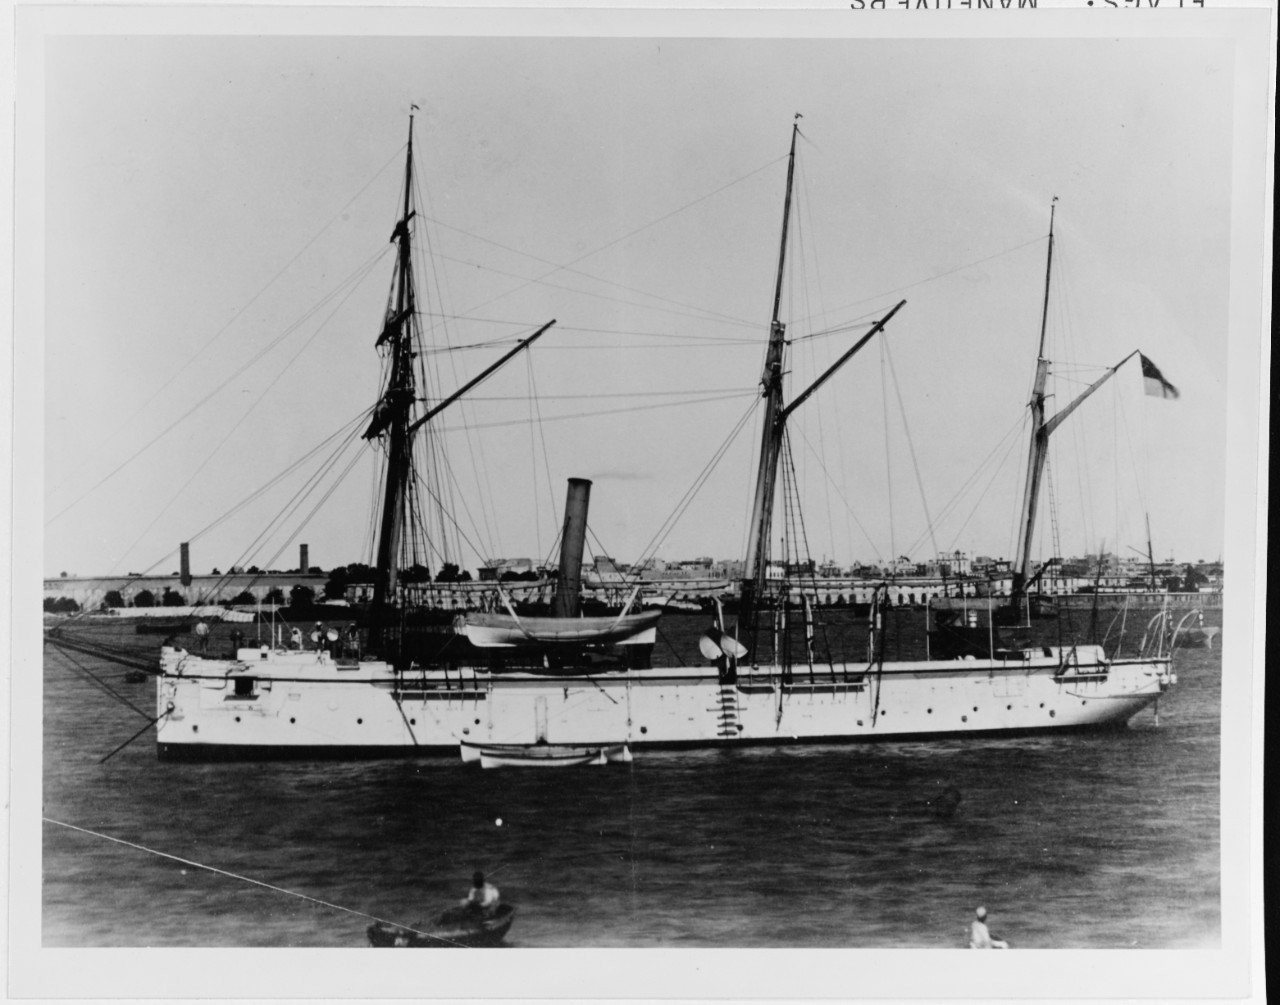 ALBACORE (British gunboat, 1883-1906)